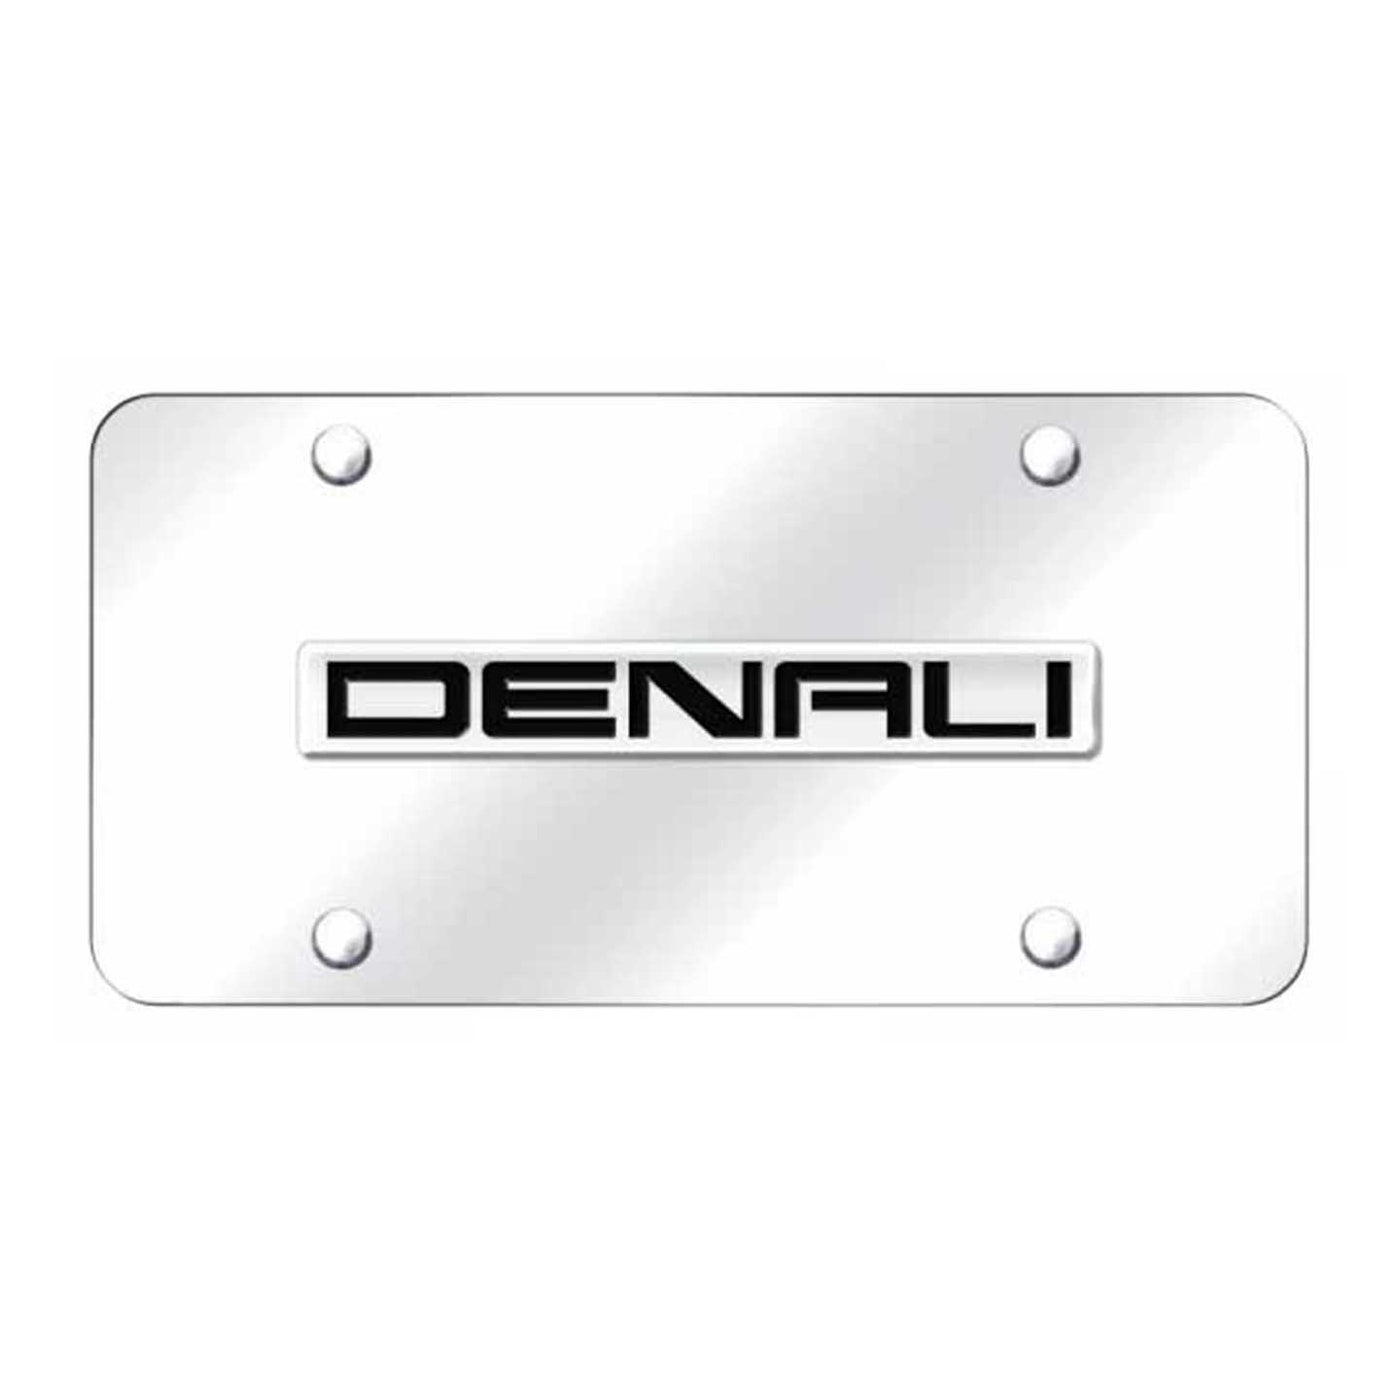 Denali Name License Plate - Chrome on Mirrored